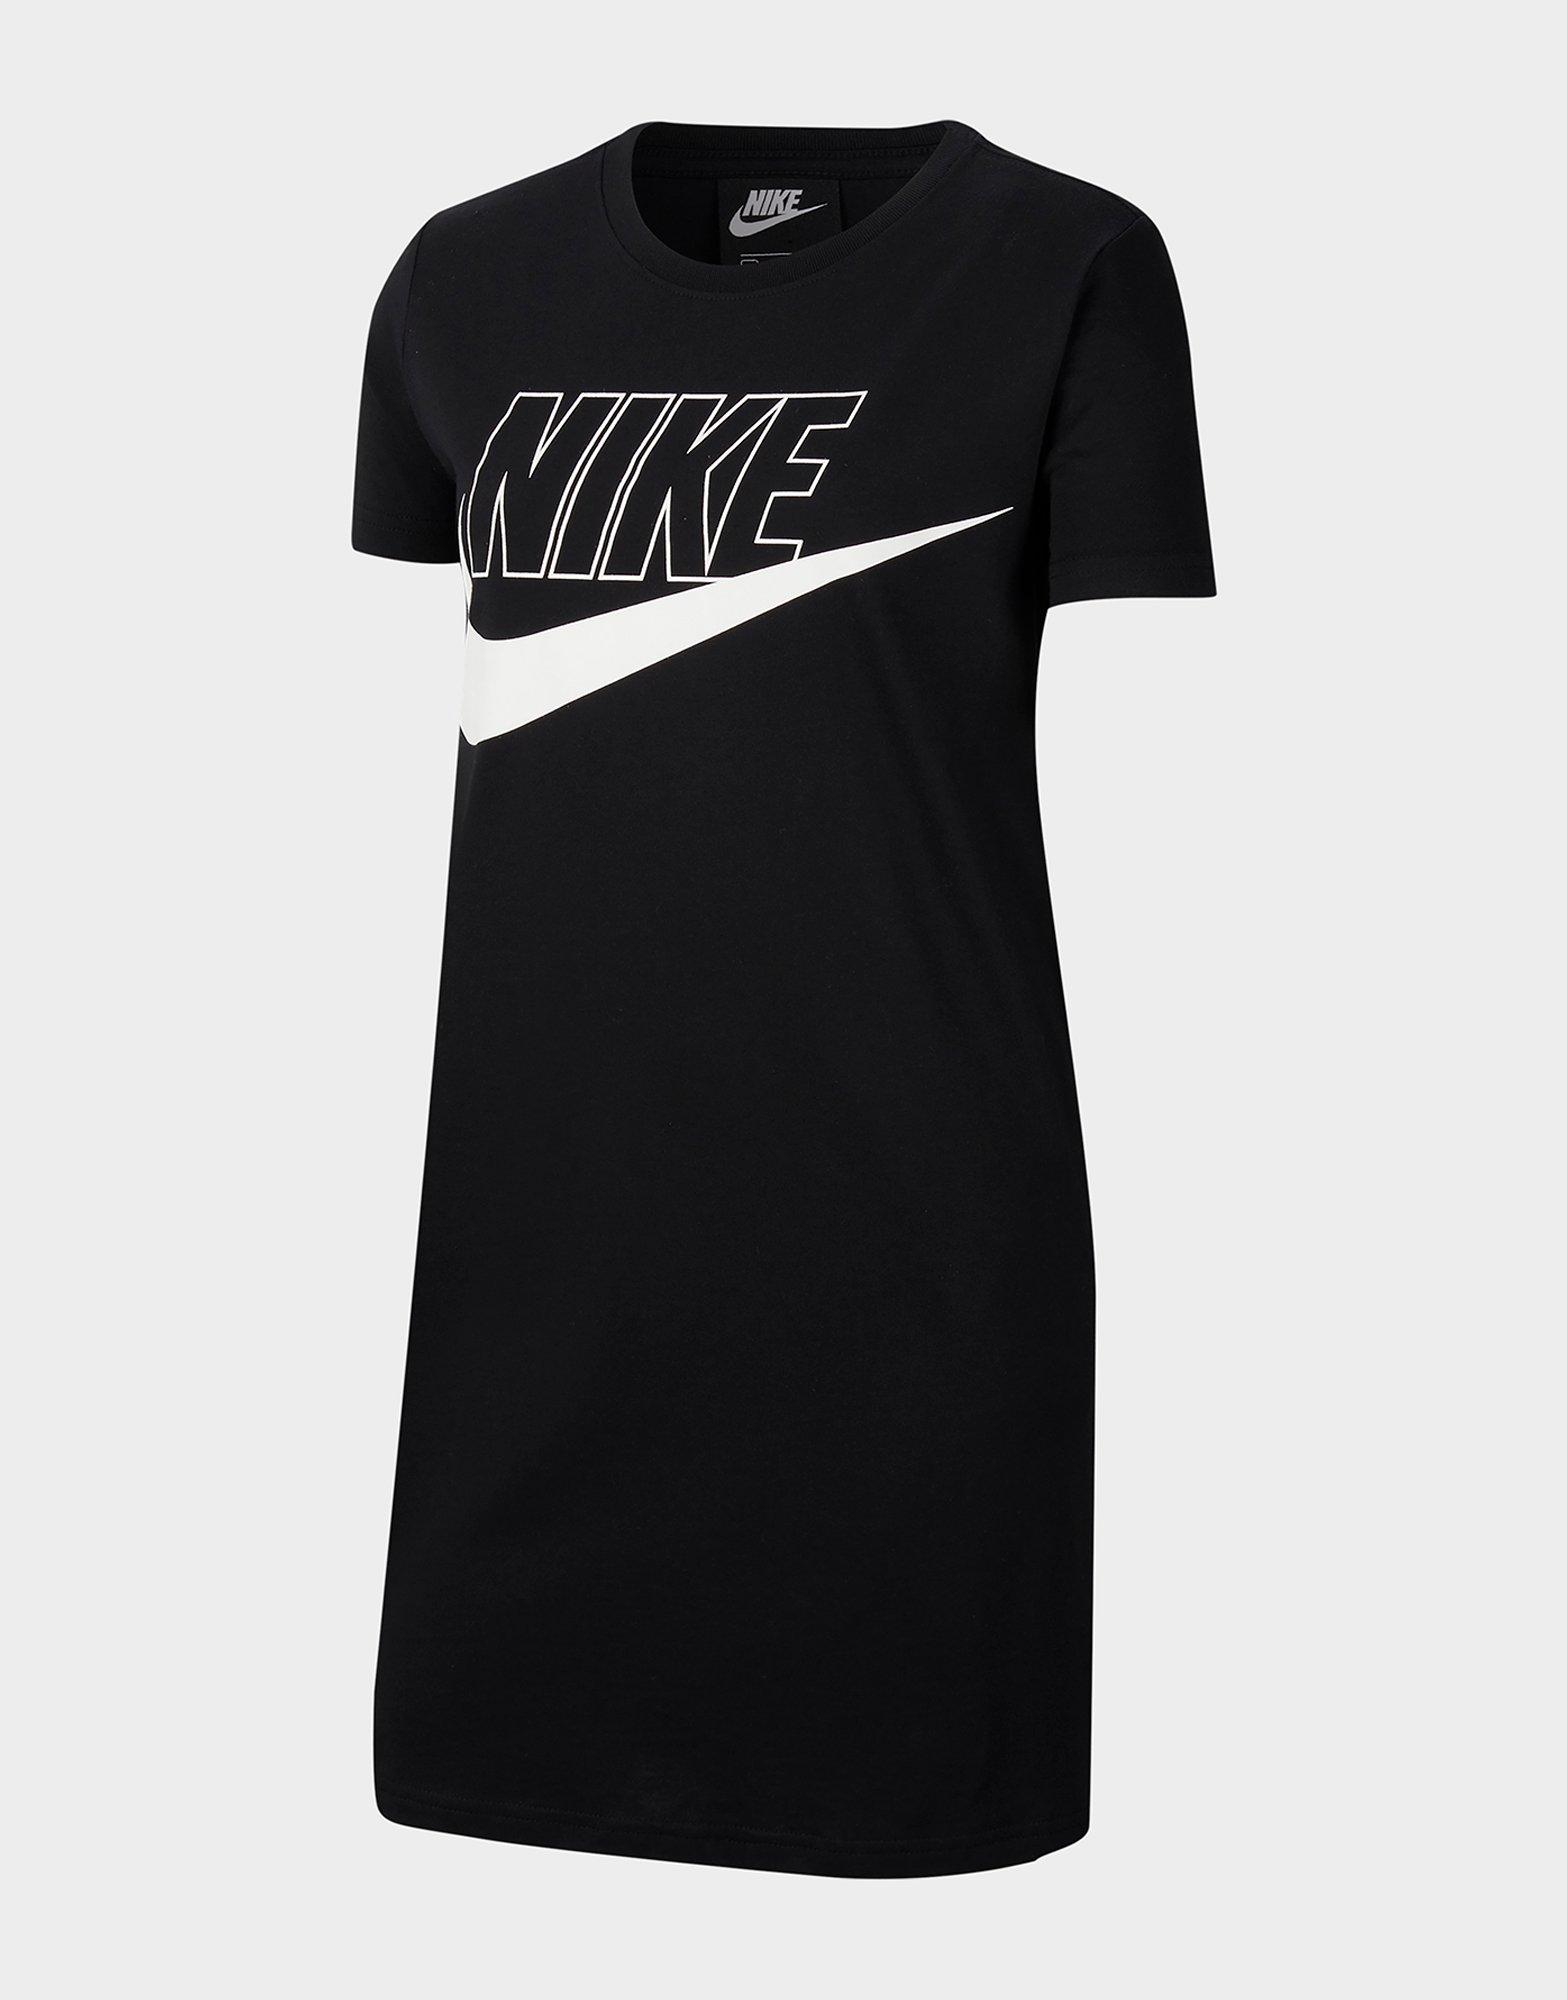 Black Nike Girls' Futura T-Shirt Dress 